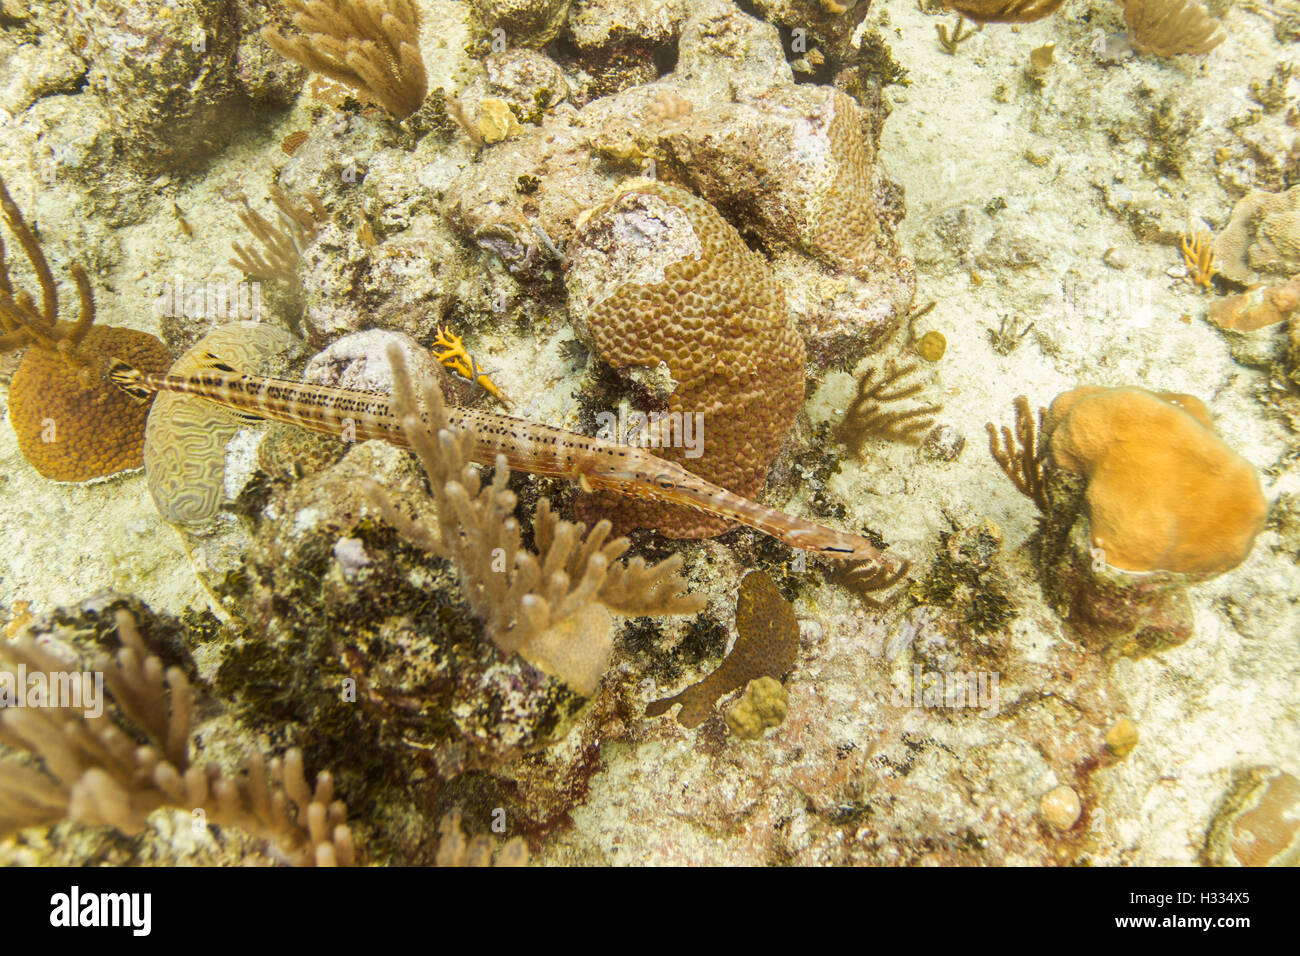 Atlantic trumpetfish Stock Photo